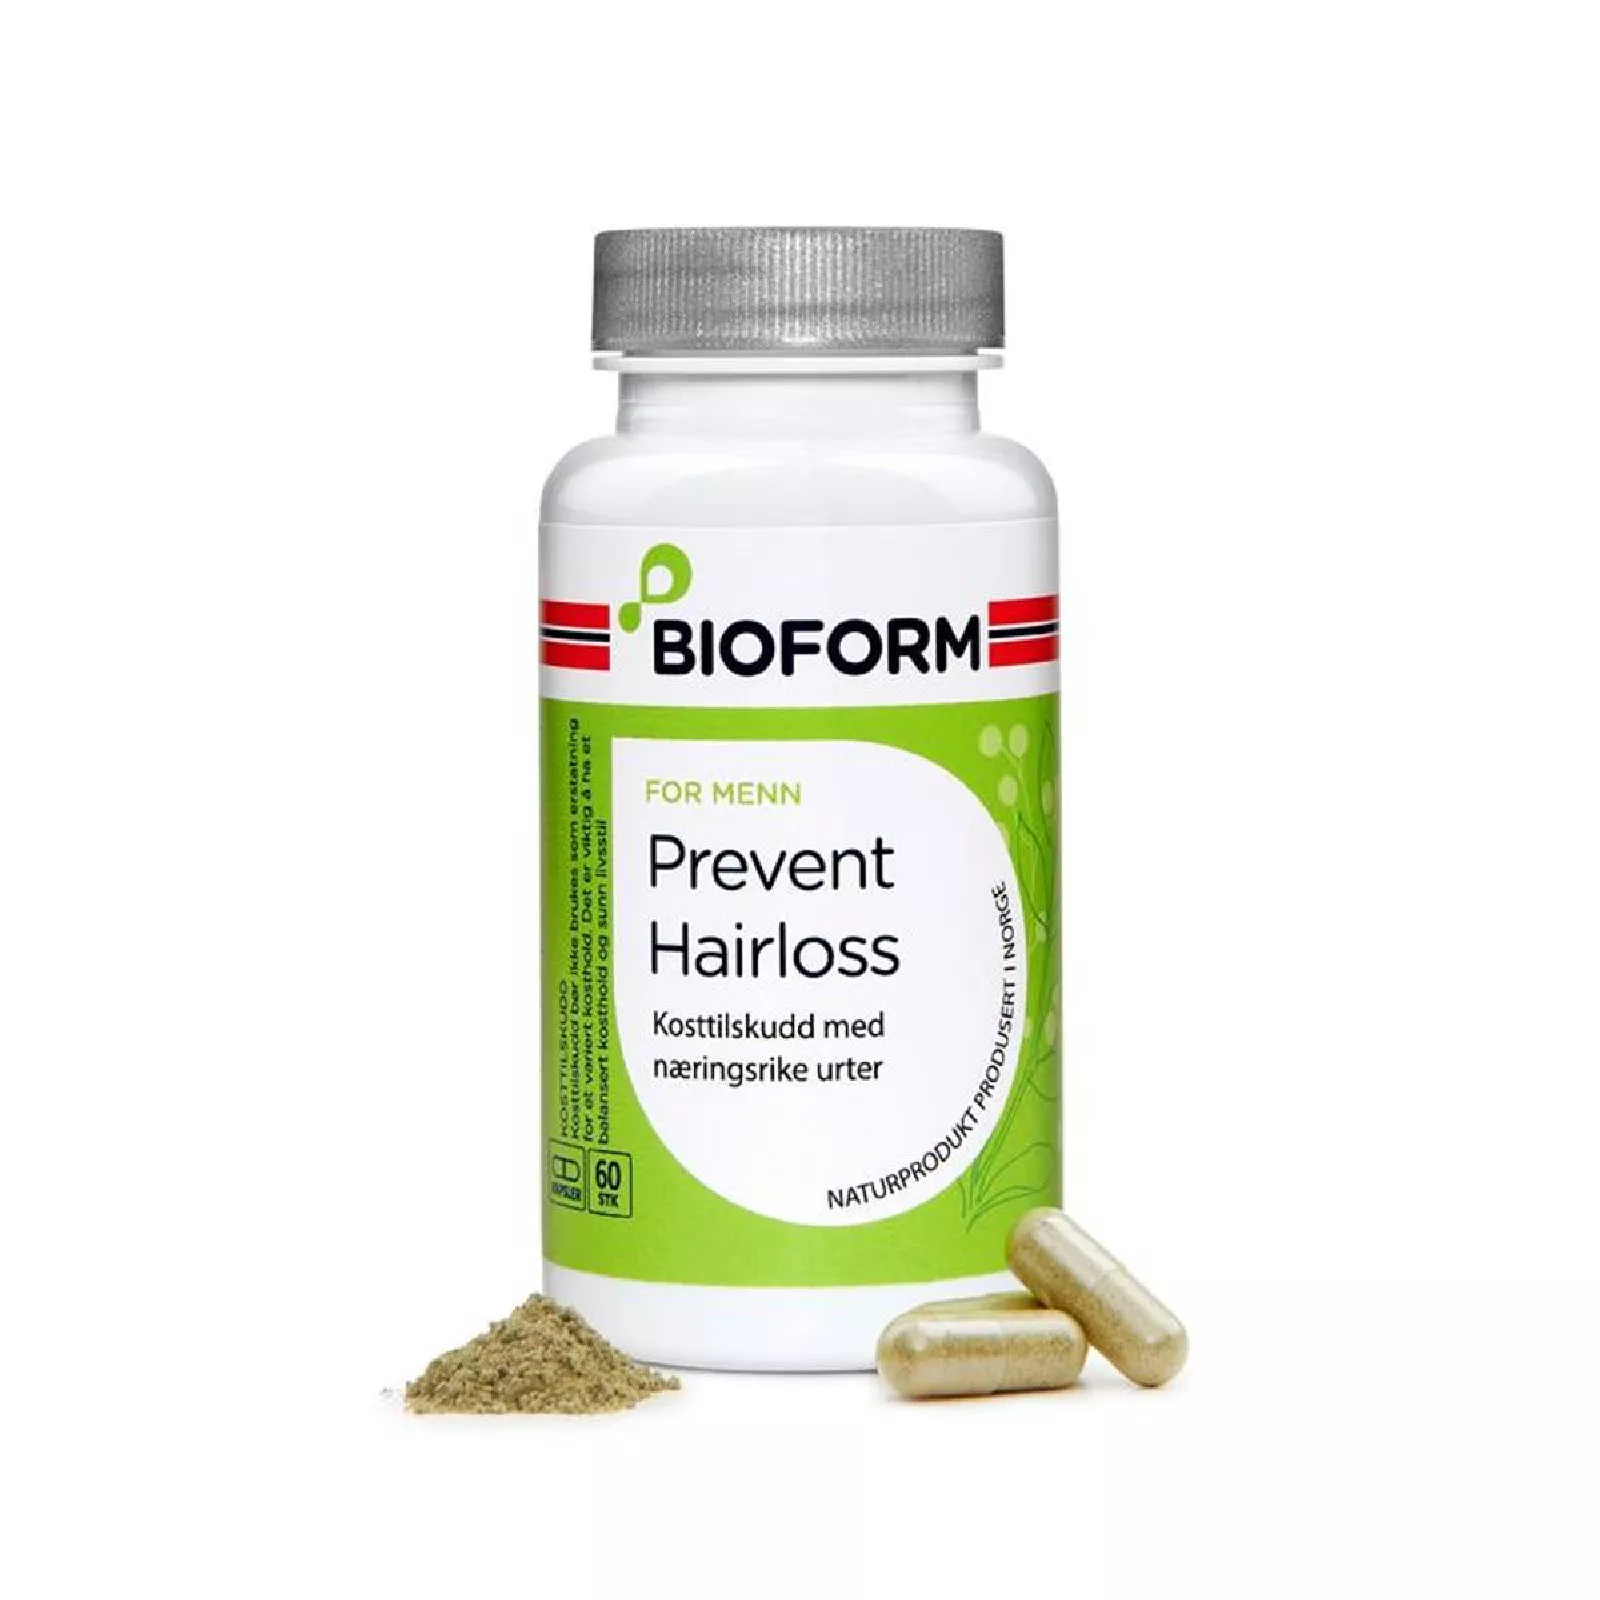 Prevent hairloss 1 w1200h1200